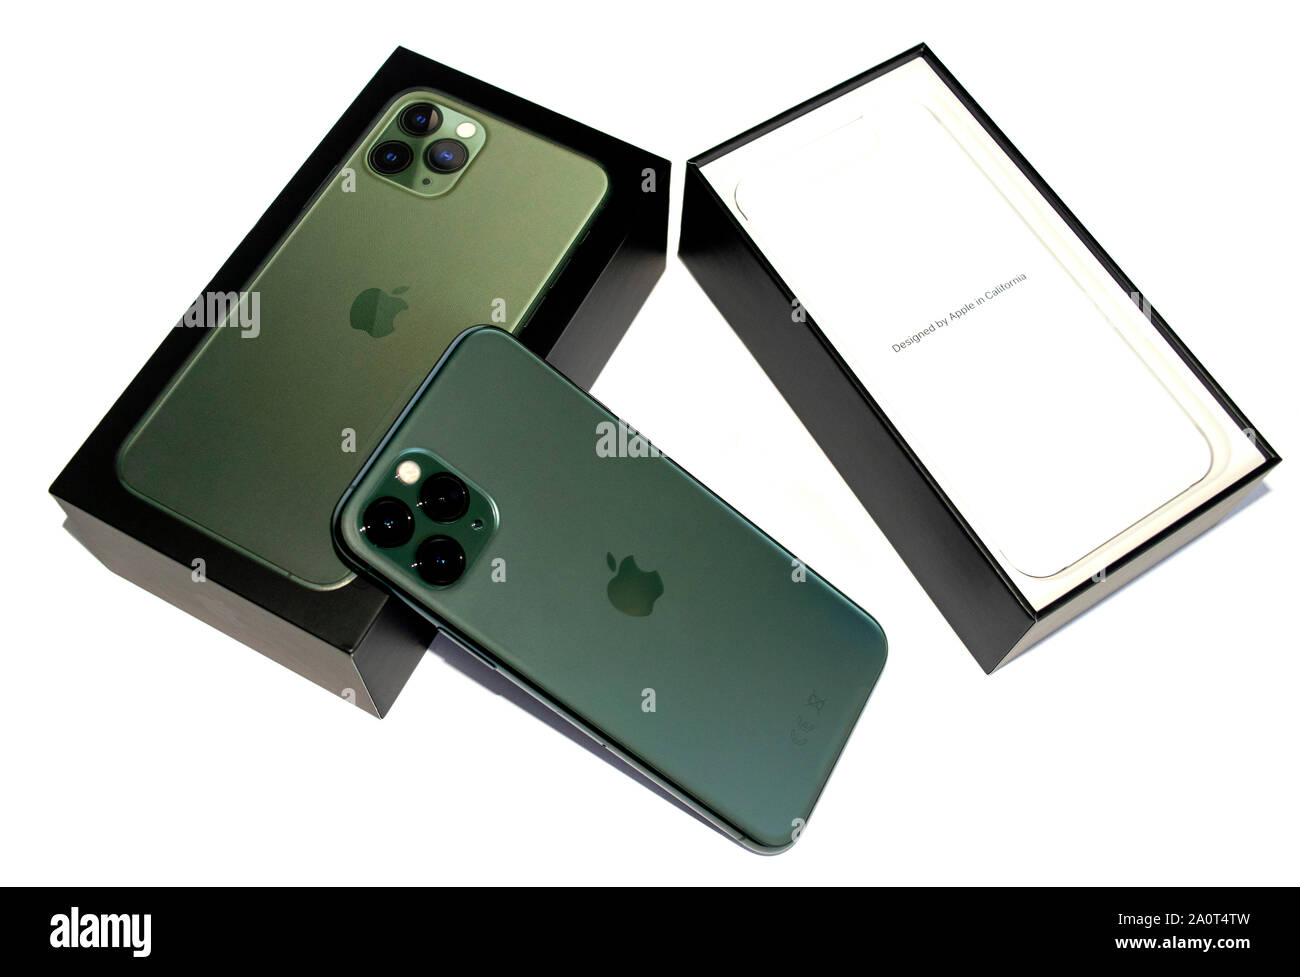 Dubai / UAE - September 21, 2019: New Midnight Green Apple Iphone 11 Pro in original box isolated on white background. Apple iphone 11 pro Stock Photo